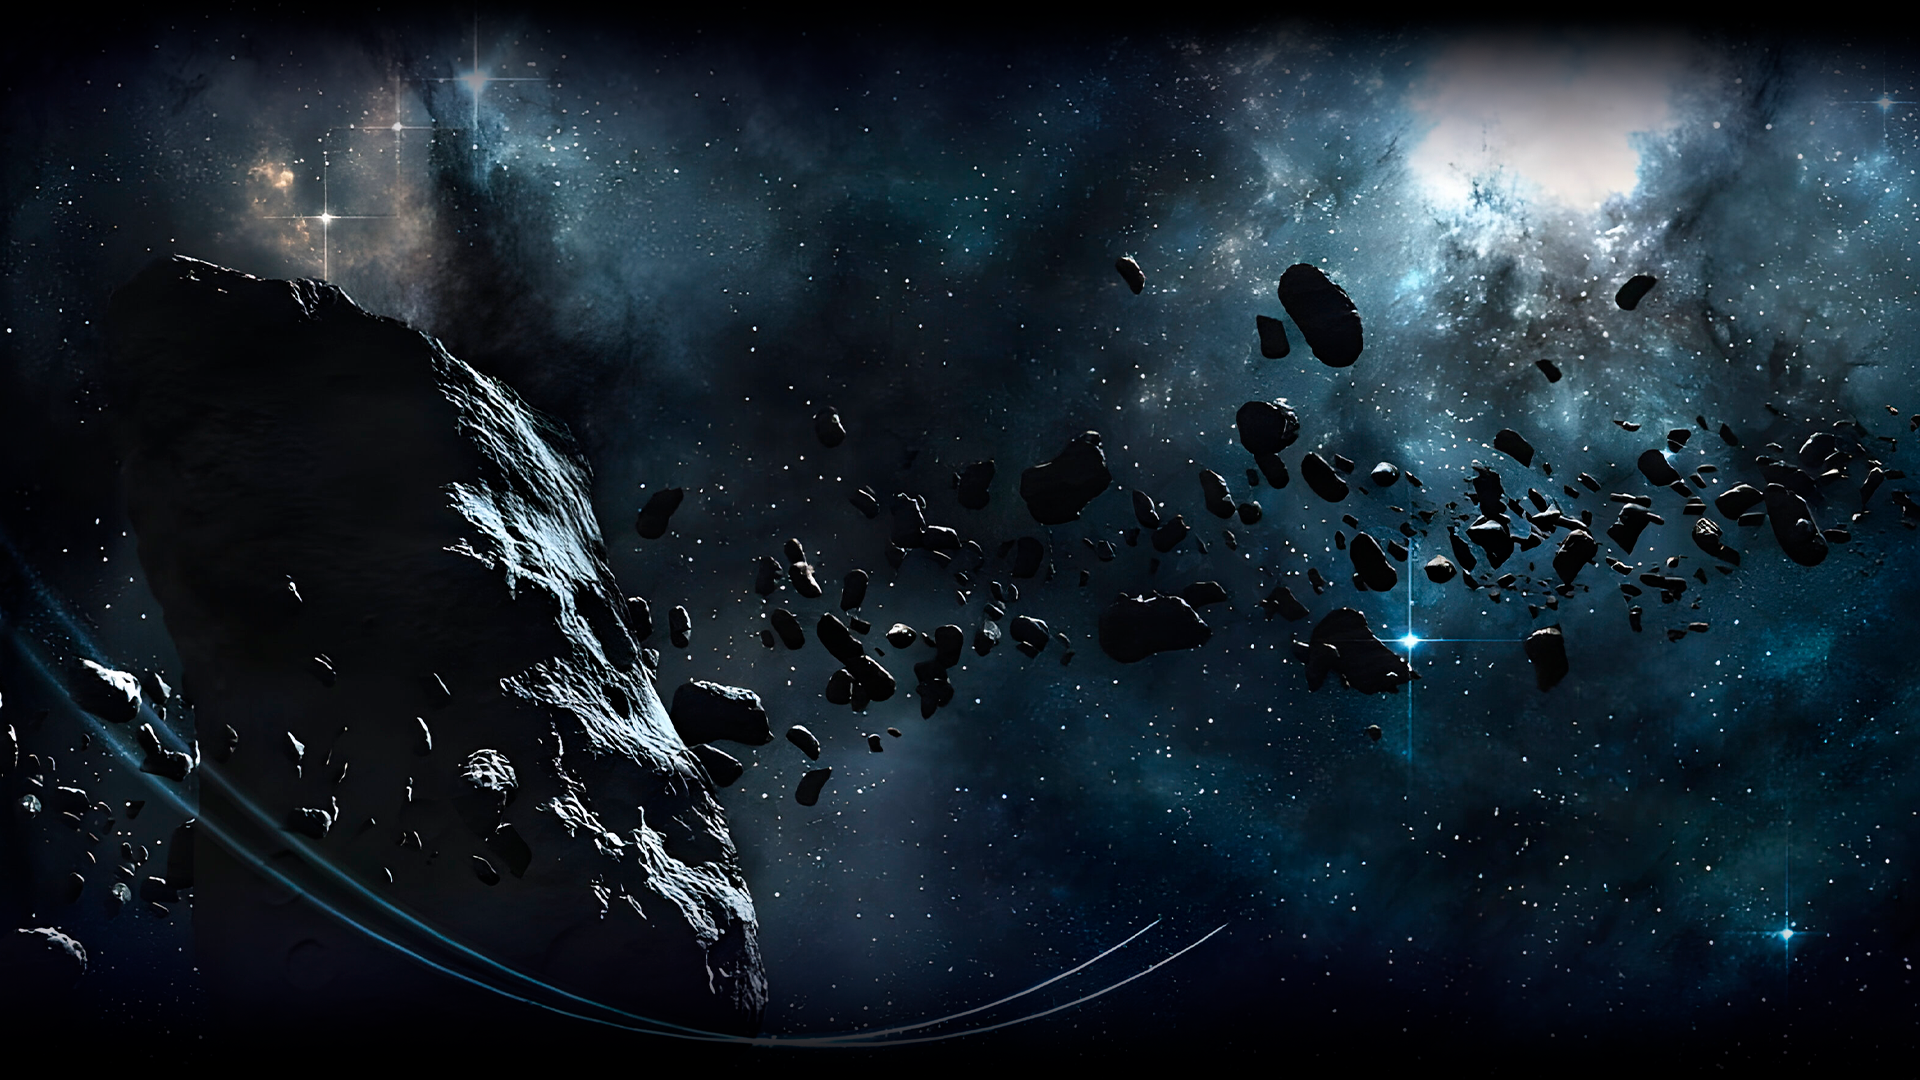 Super Asteroids & Missile Command